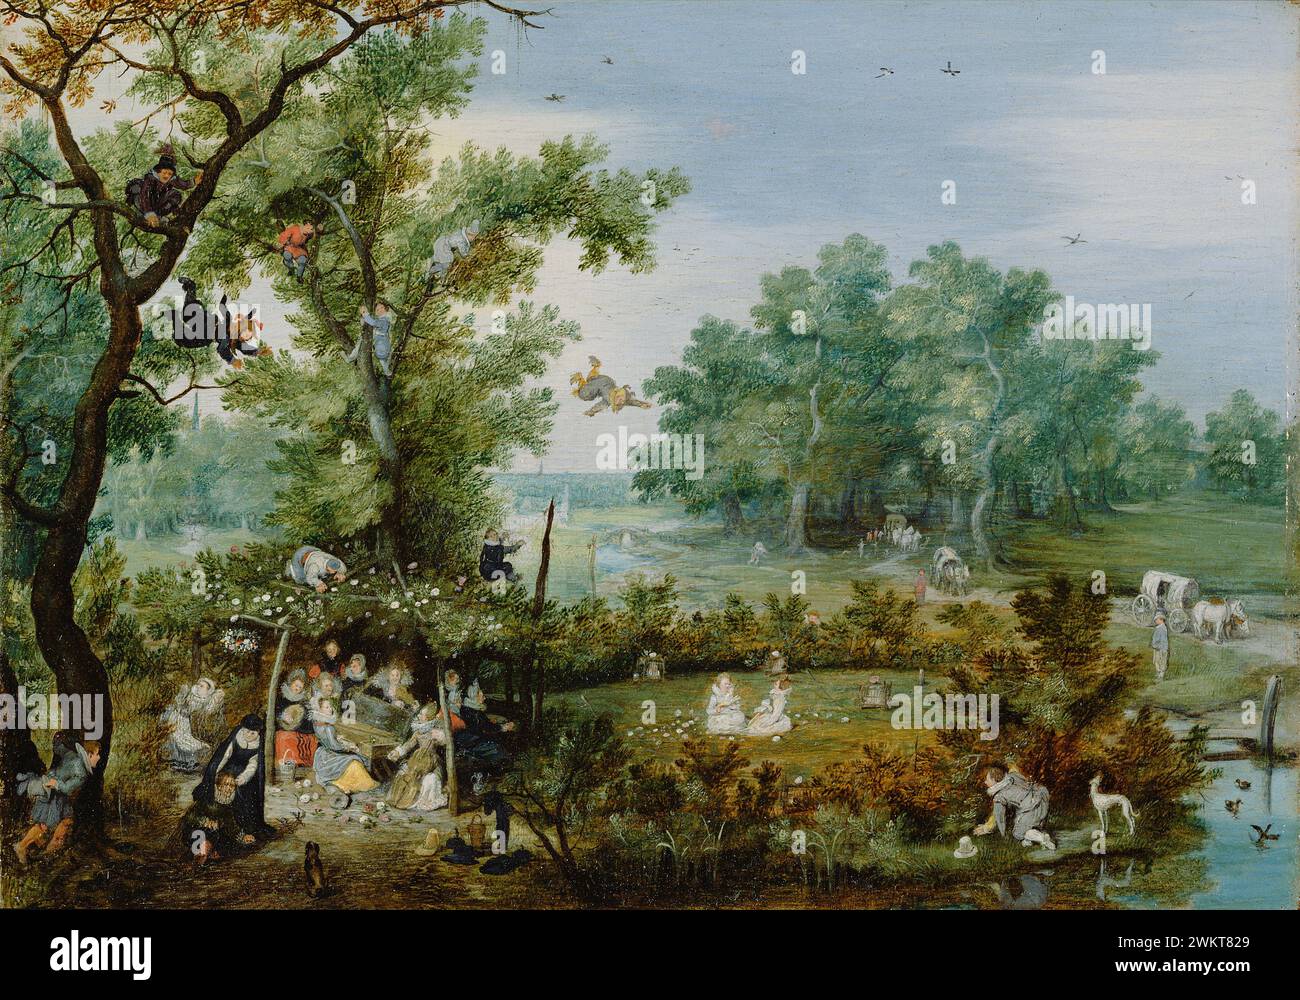 Merry Company in an Arbor; Adriaen van de Venne, Dutch, 1589 - 1662; 1615; Oil on panel; Unframed: 16.4 x 23 cm (6 7/16 x 9 1/16 in.), Framed: 24.1 x 30.8 x 2.5 cm (9 1/2 x 12 1/8 x 1 in.); 83.PB.364.1 Stock Photo